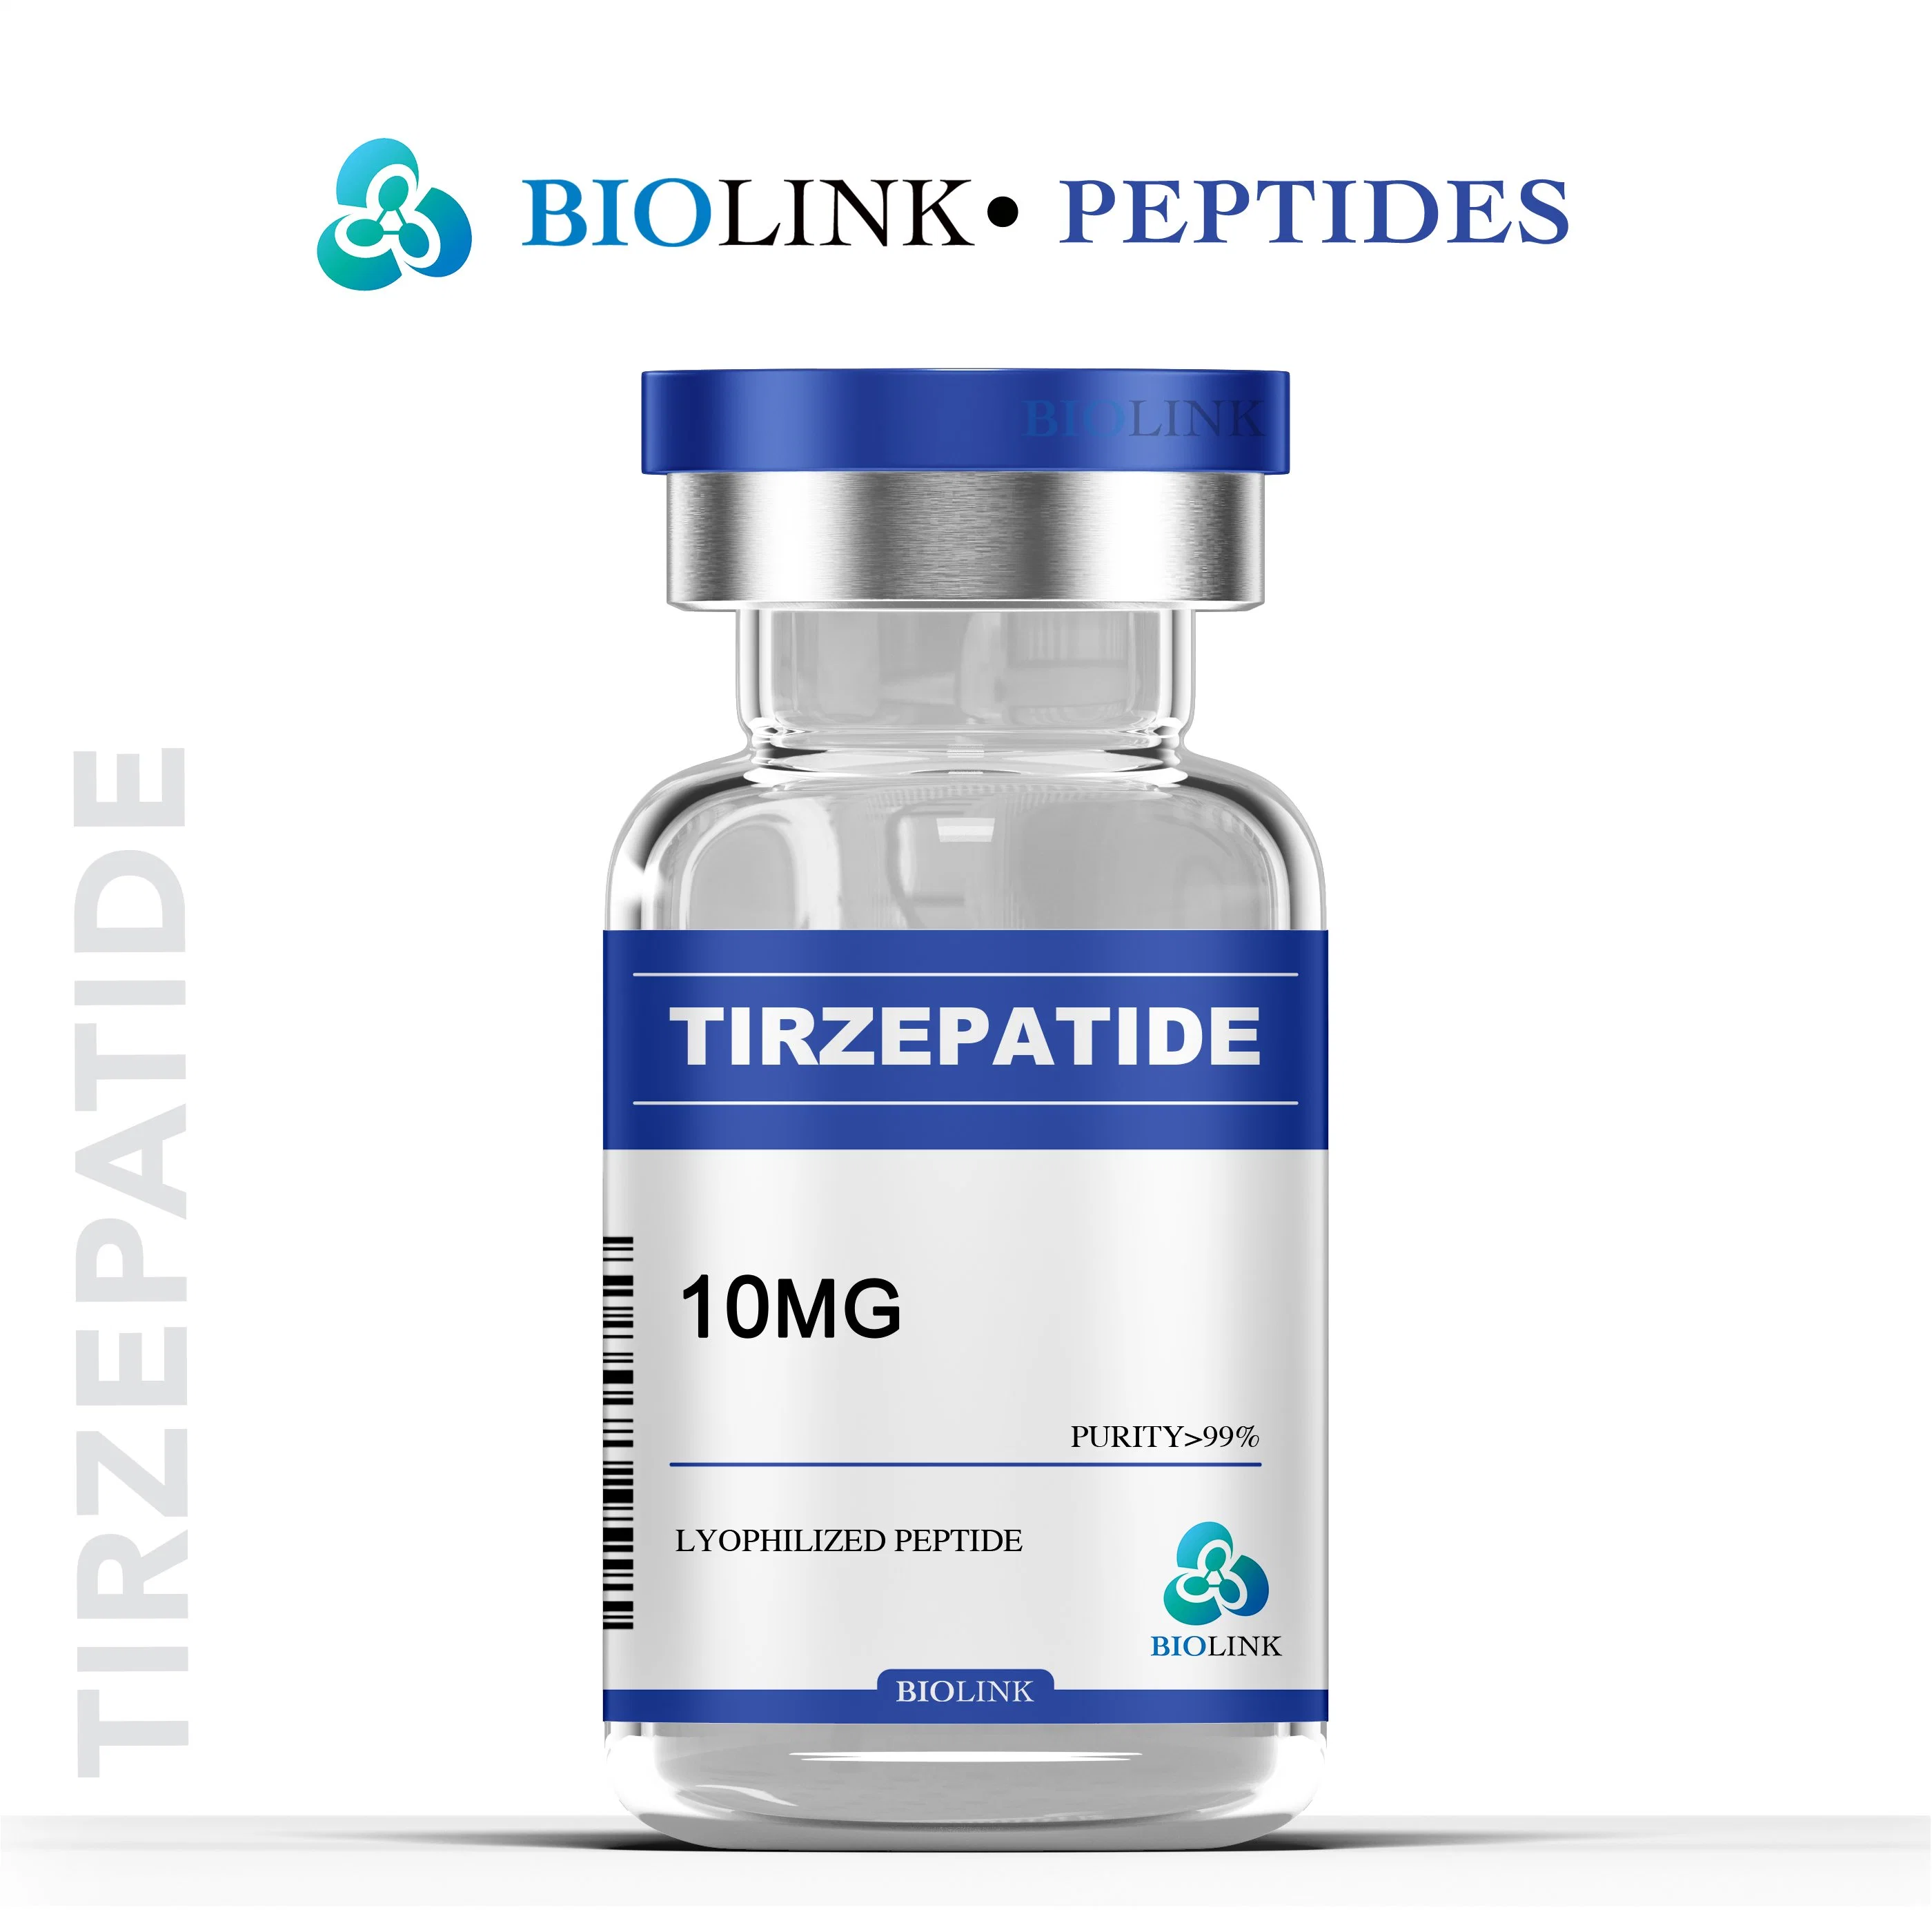 Biolink Peptides Semaglutide Tirzepatide Retatrutide 5mg Great Appetite Suppression USA Trial Support CAS: 2381089-83-2